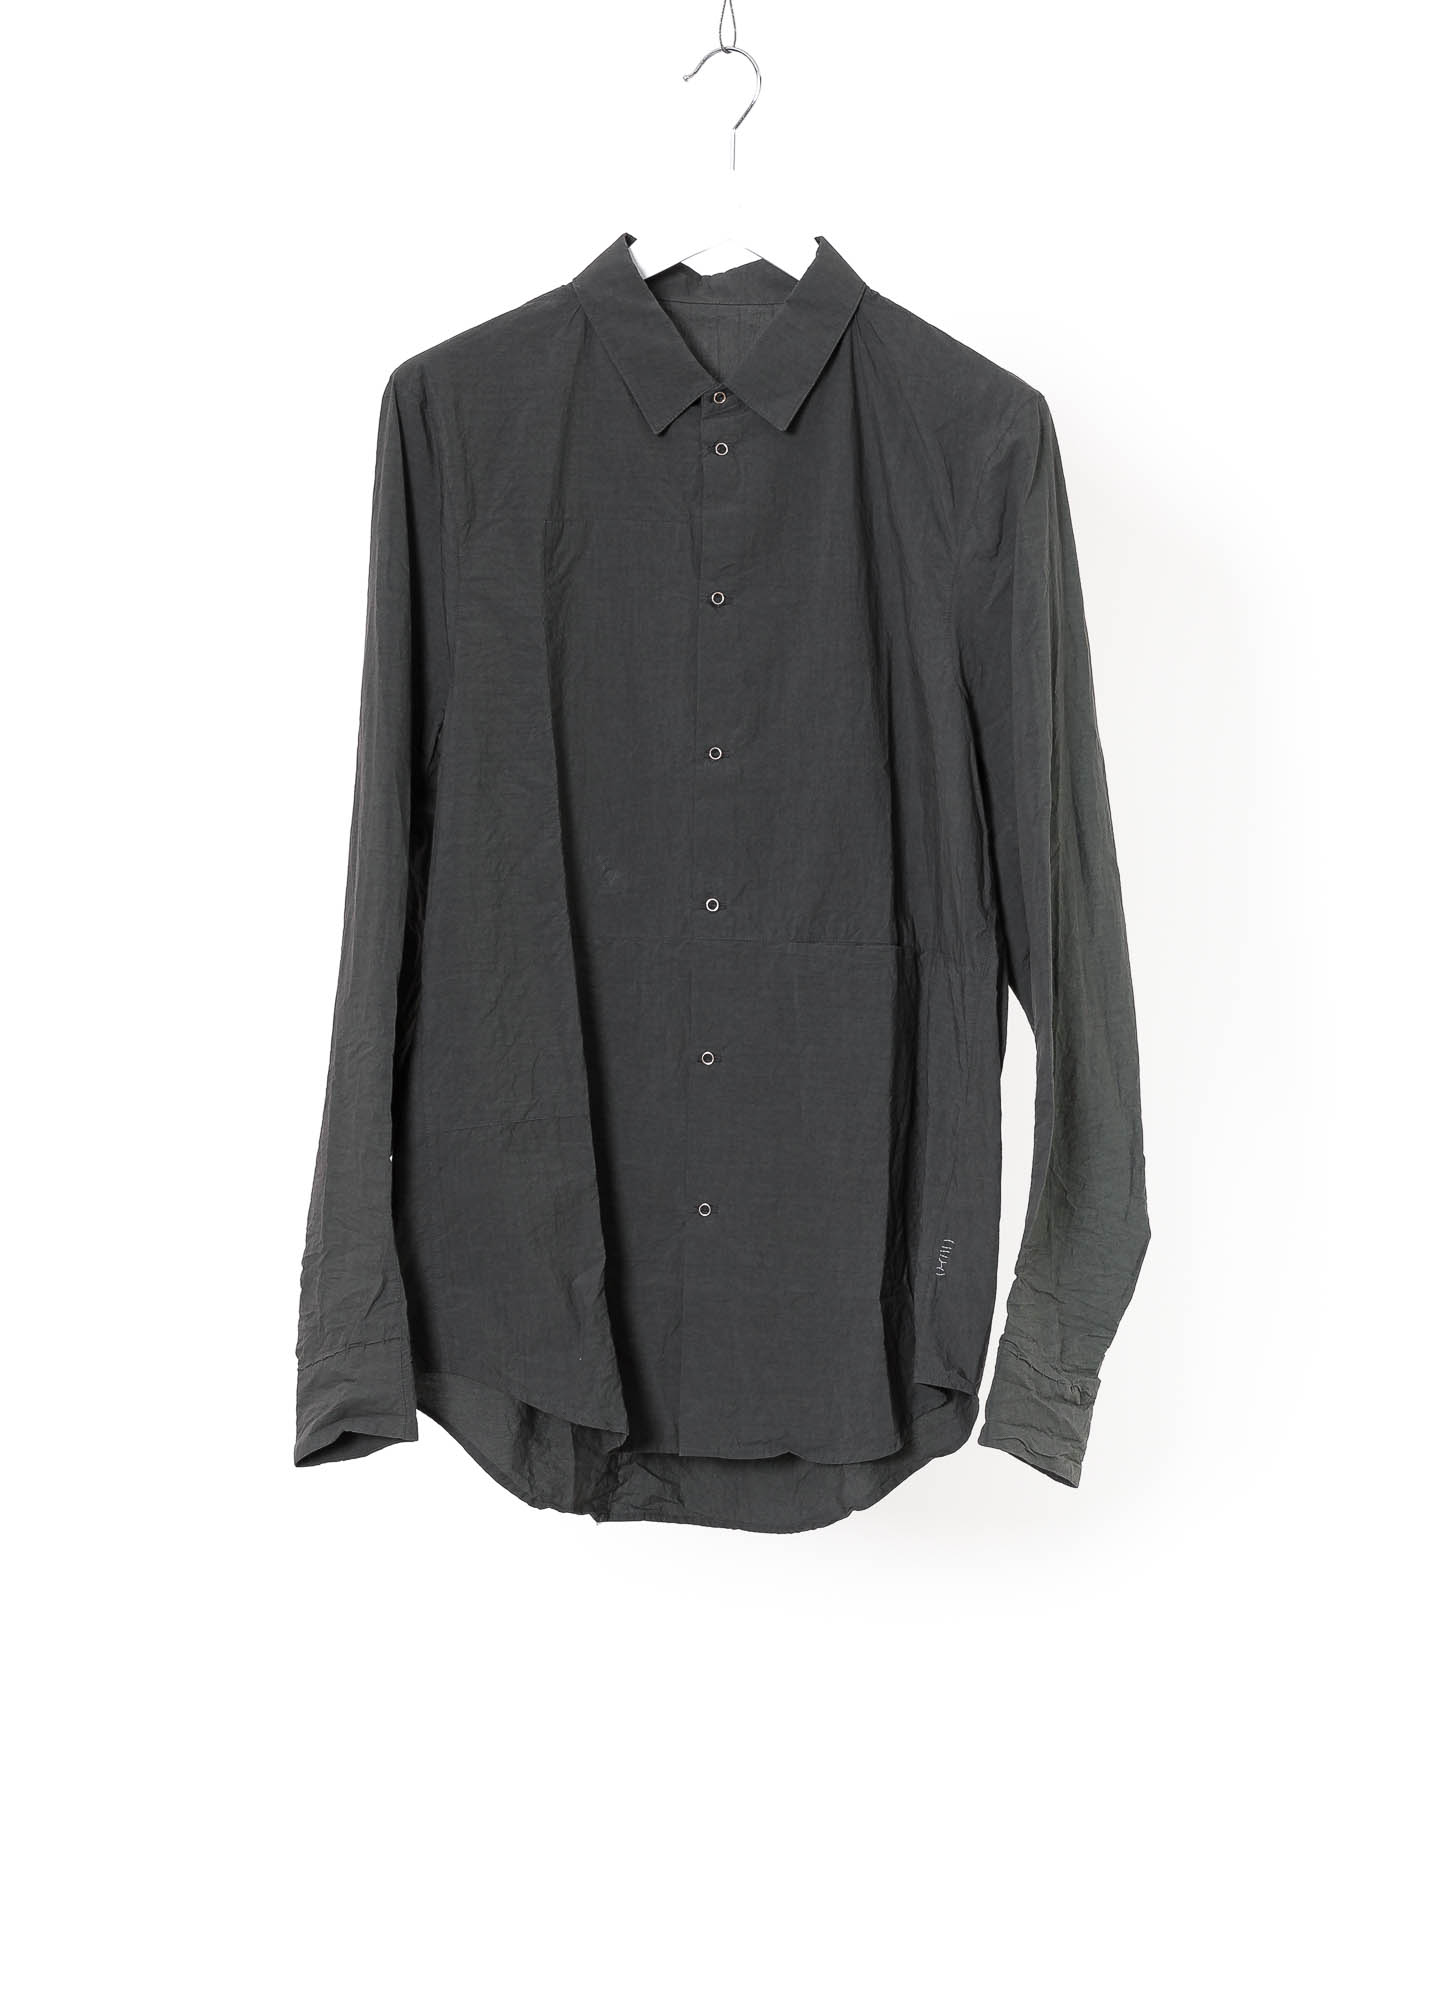 hide-m | TAICHI MURAKAMI Displacement Inside Shirt, dark grey cotton